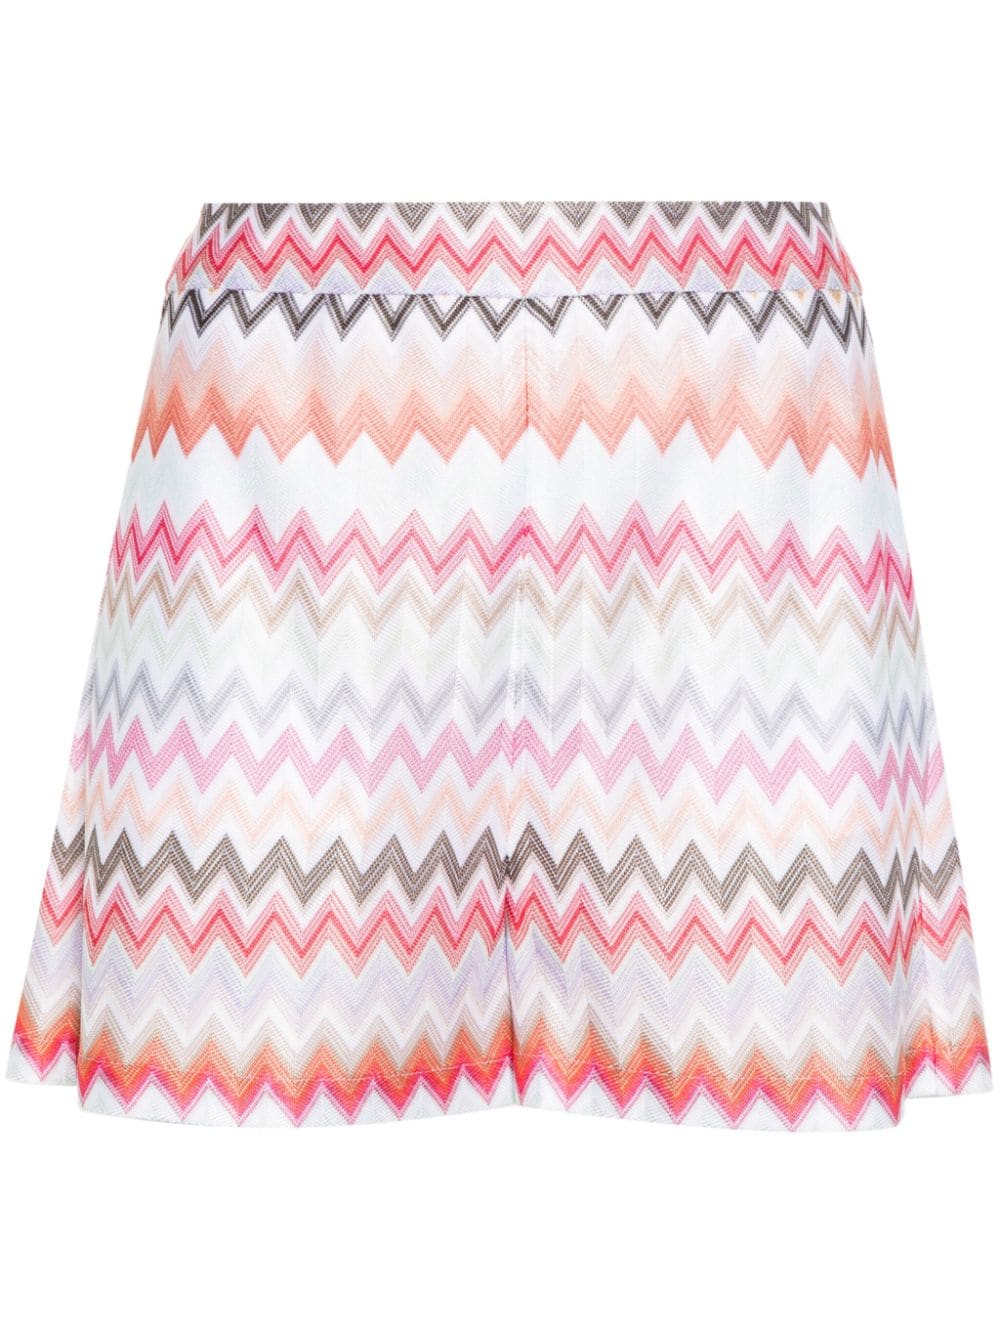 Zigzag-pattern shorts<BR/>